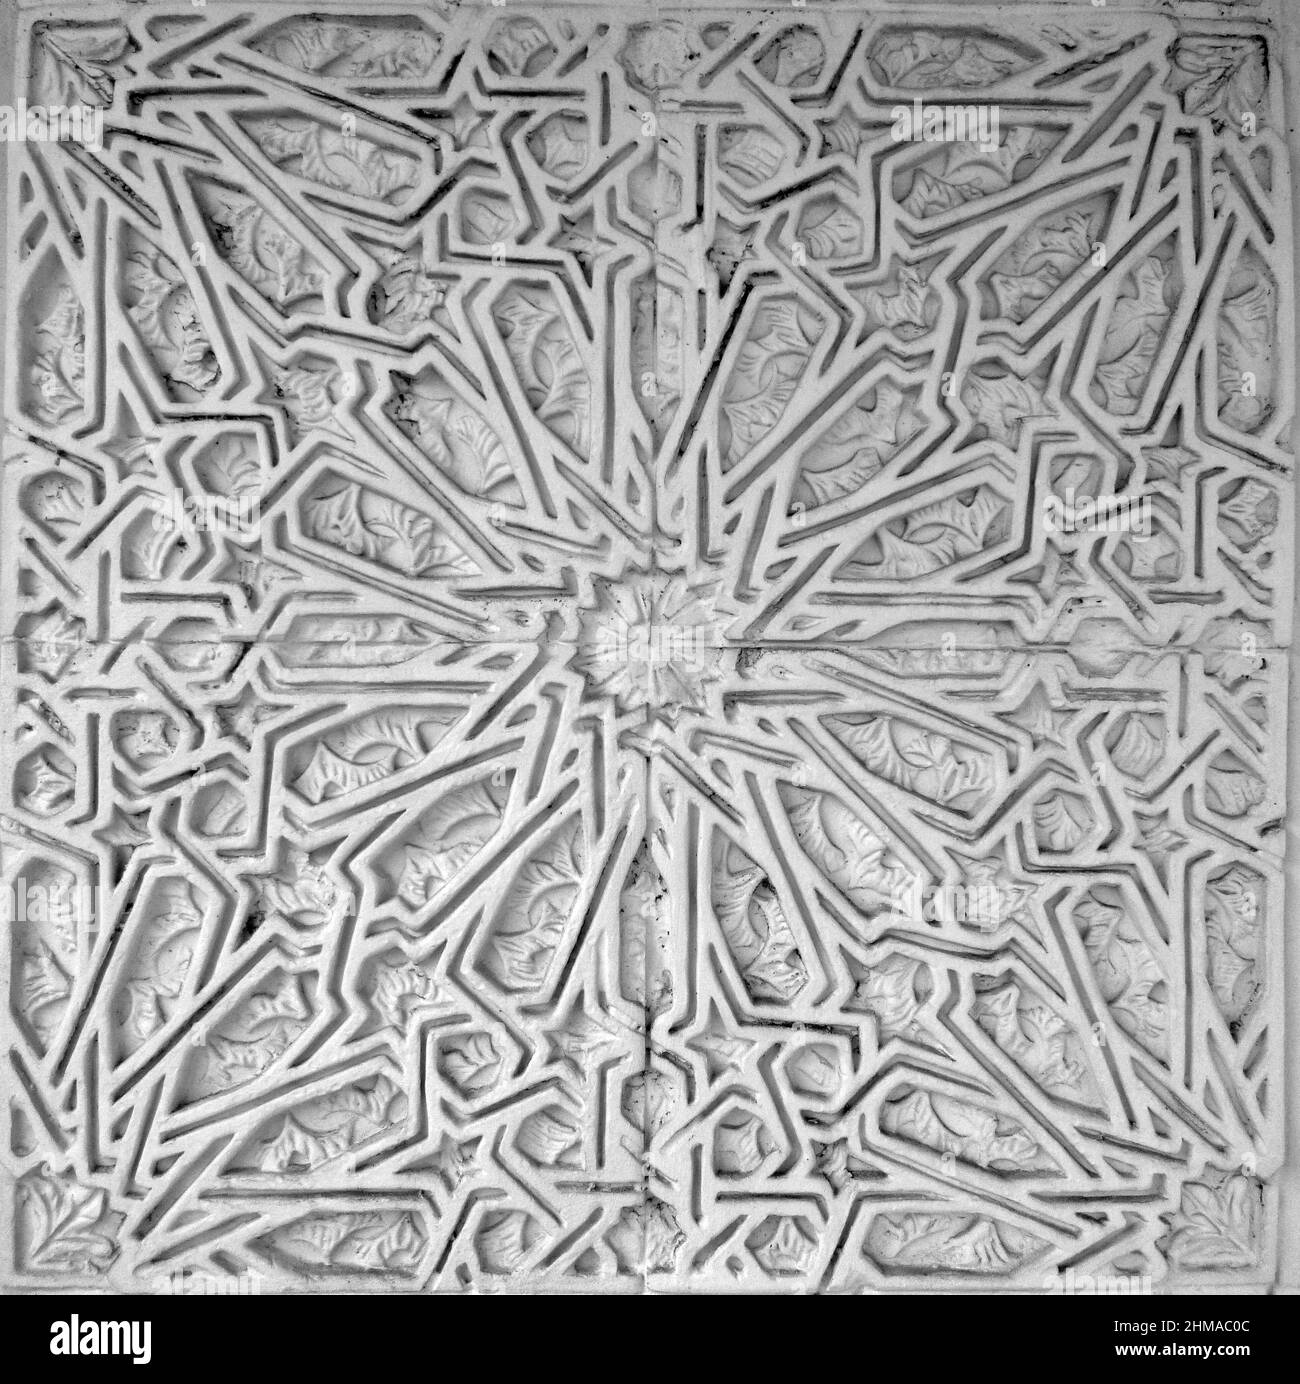 Detailing and craftsmanship on gypsum tiles Stock Photo